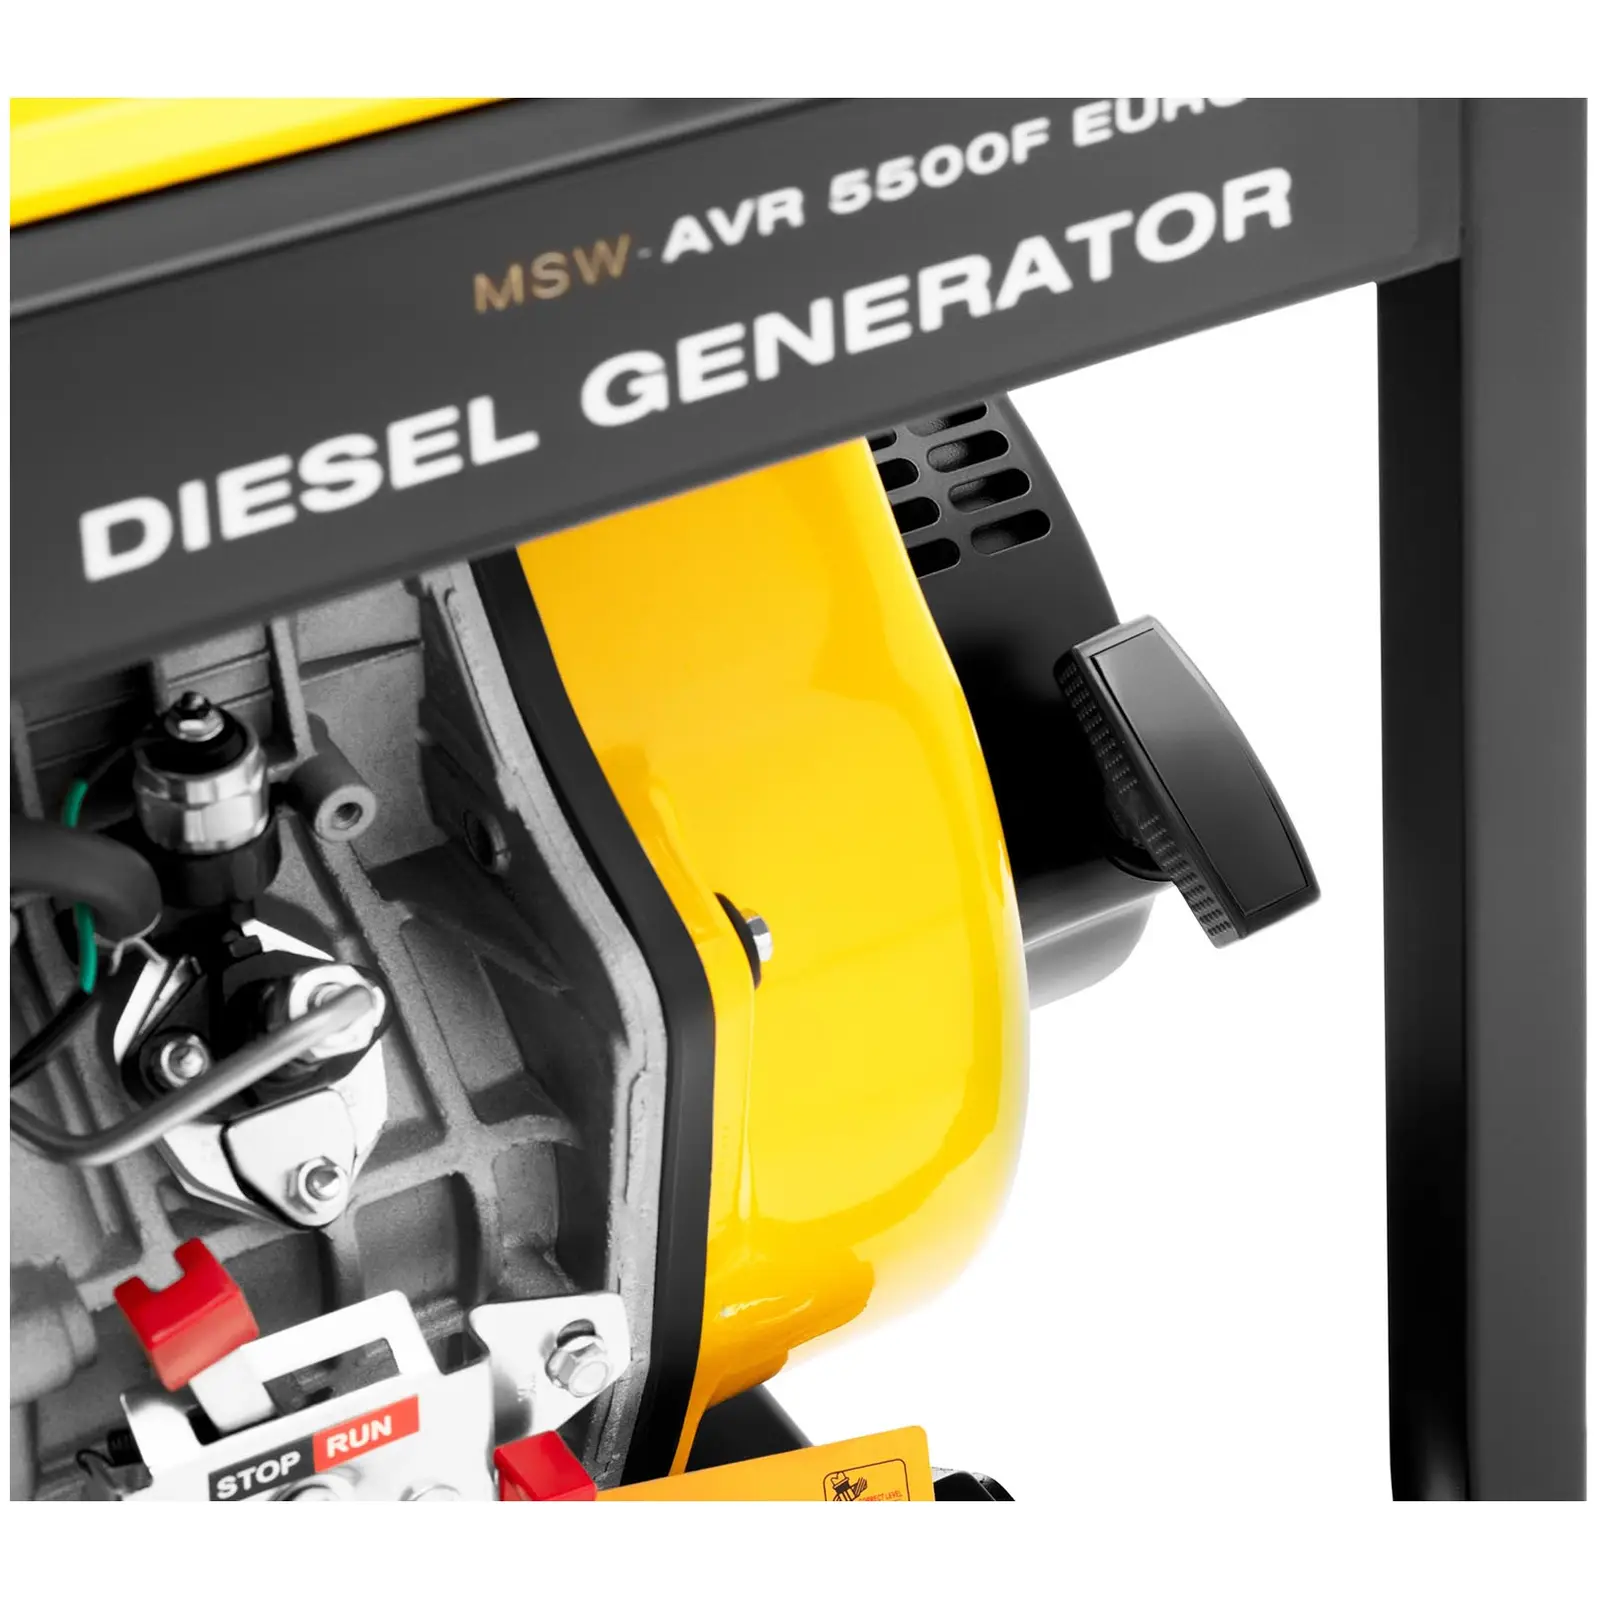 Outlet Agregat prądotwórczy Diesel - 1830 / 5500 W - 12,5 l - 240/400 V - mobilny - AVR - Euro 5